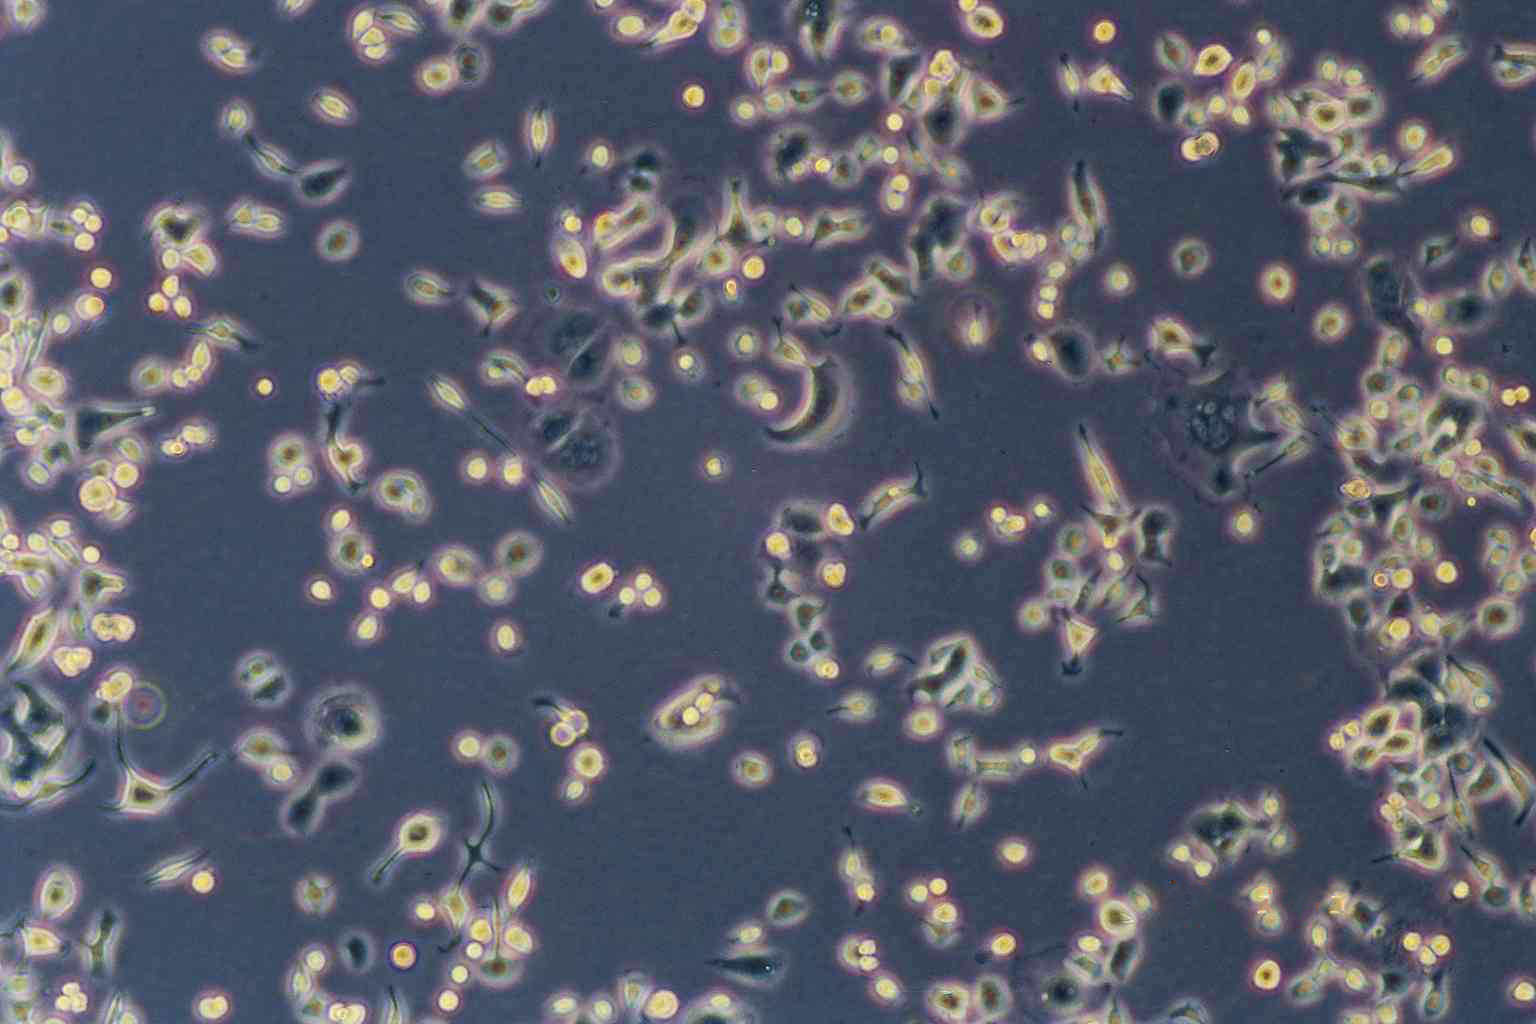 RGM1 epithelioid cells大鼠正常胃黏膜上皮细胞系,RGM1 epithelioid cells